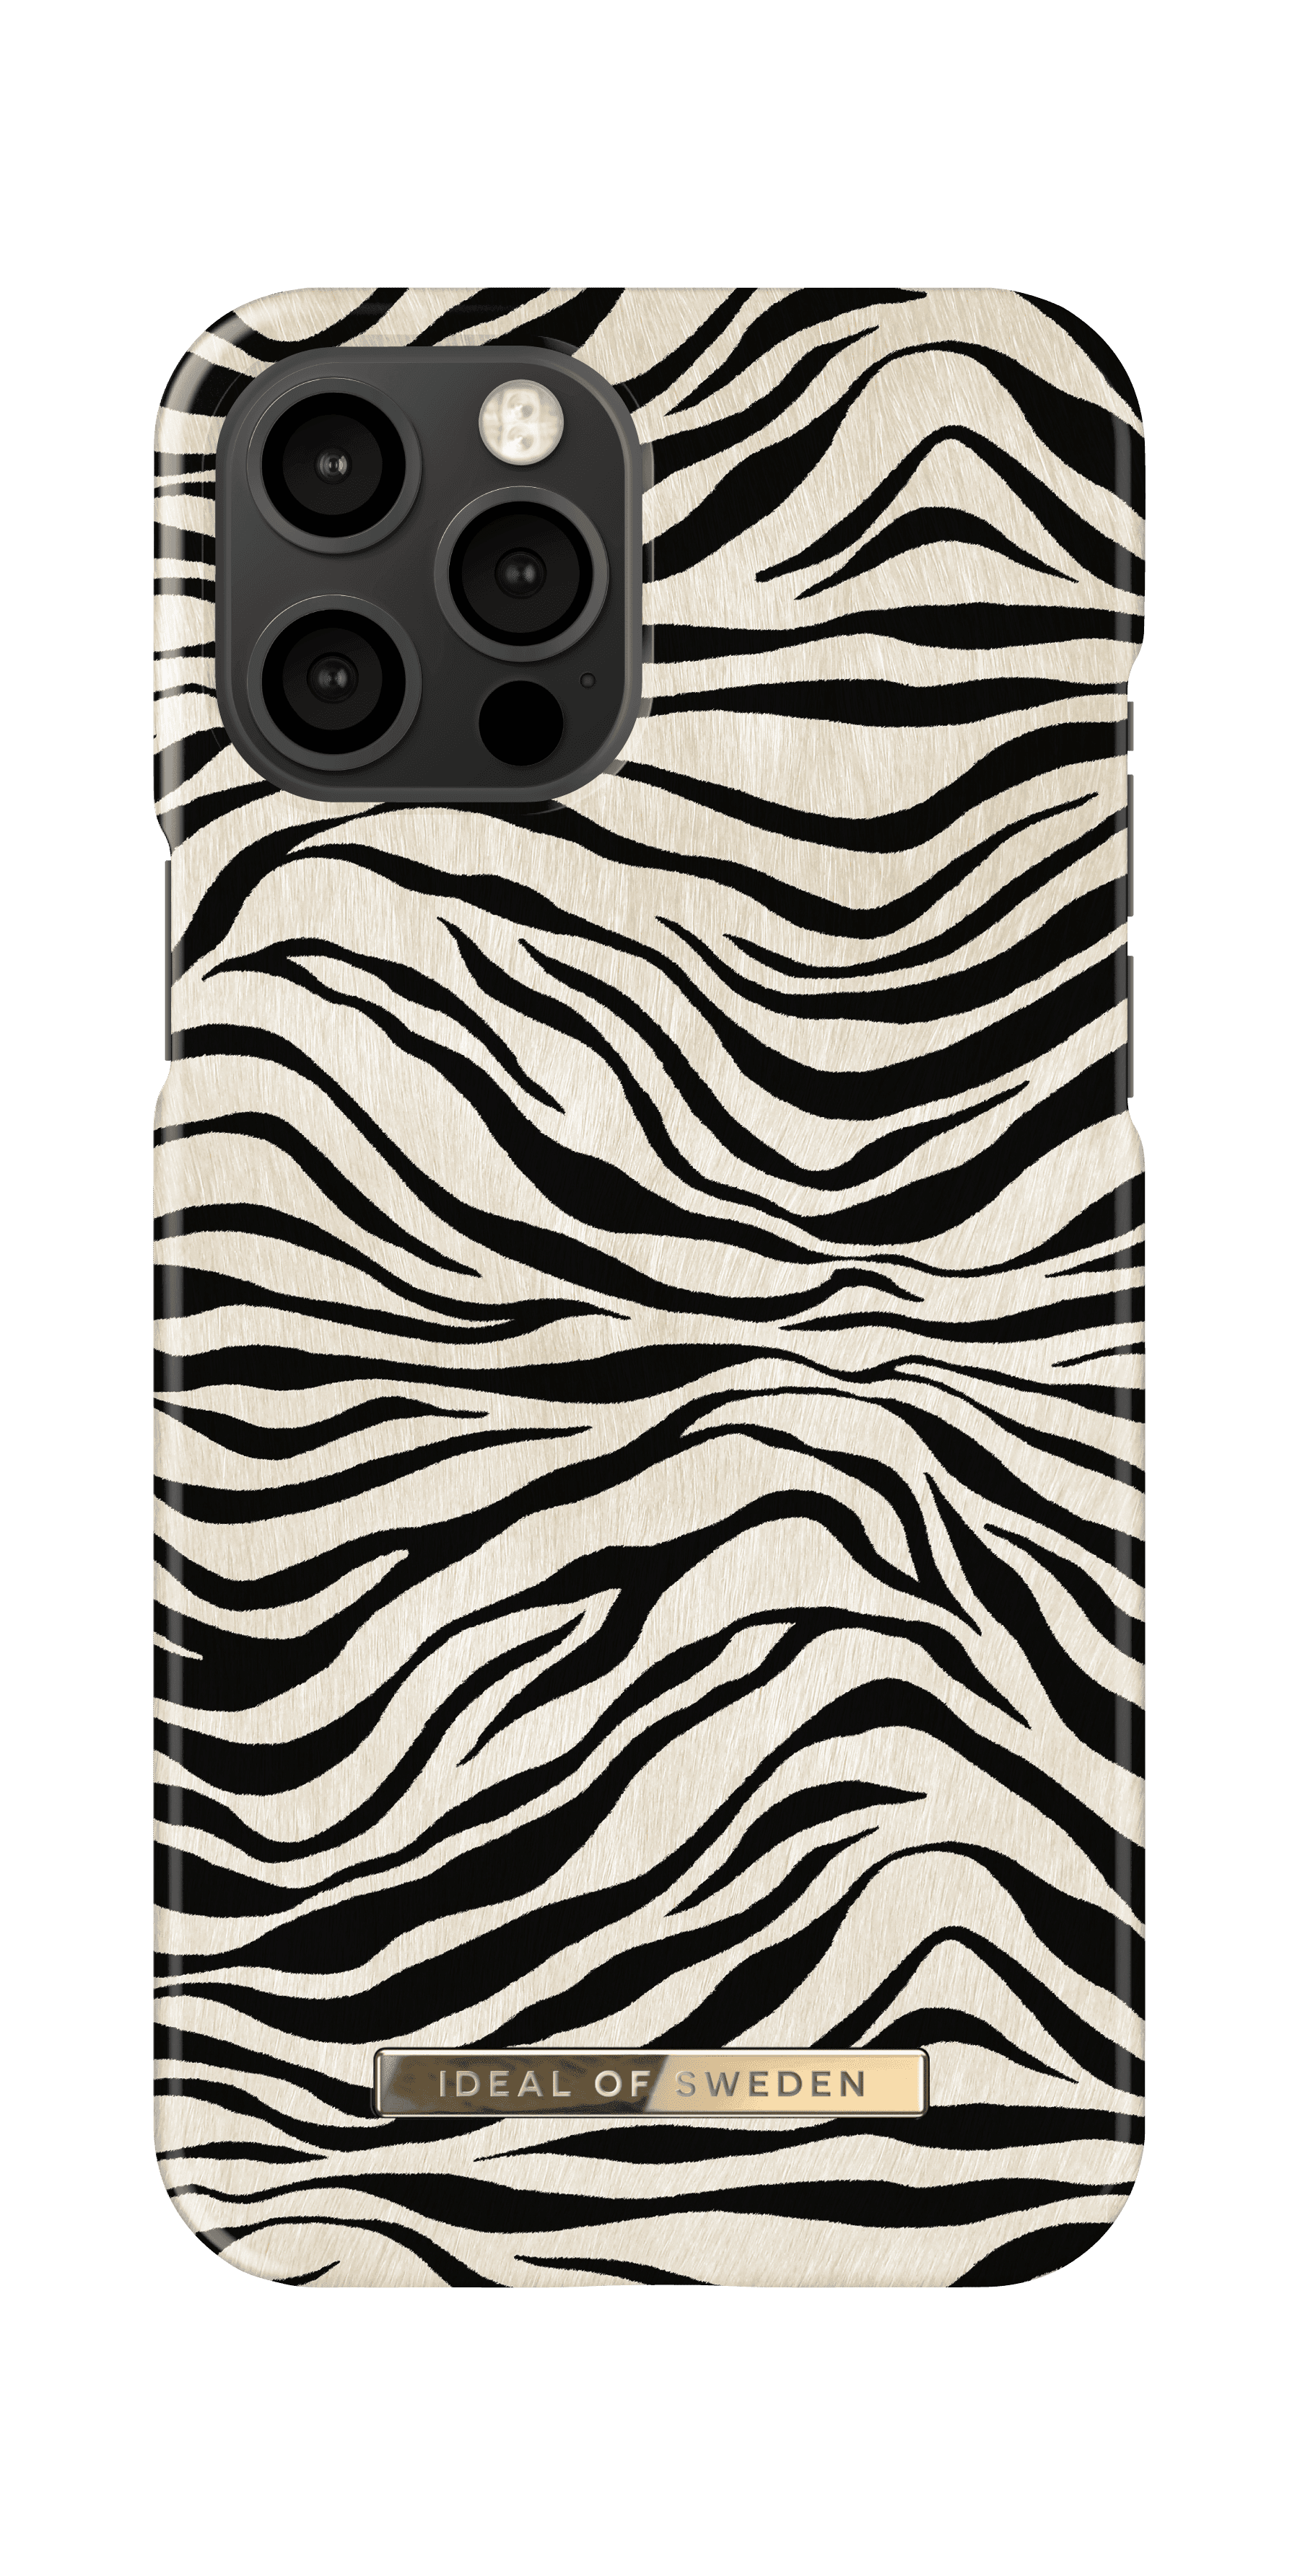 ideal of sweden zafari apple iphone 12 pro max case fashionable swedish design zebra print iphone back cover wireless charging compatible zafari zebra